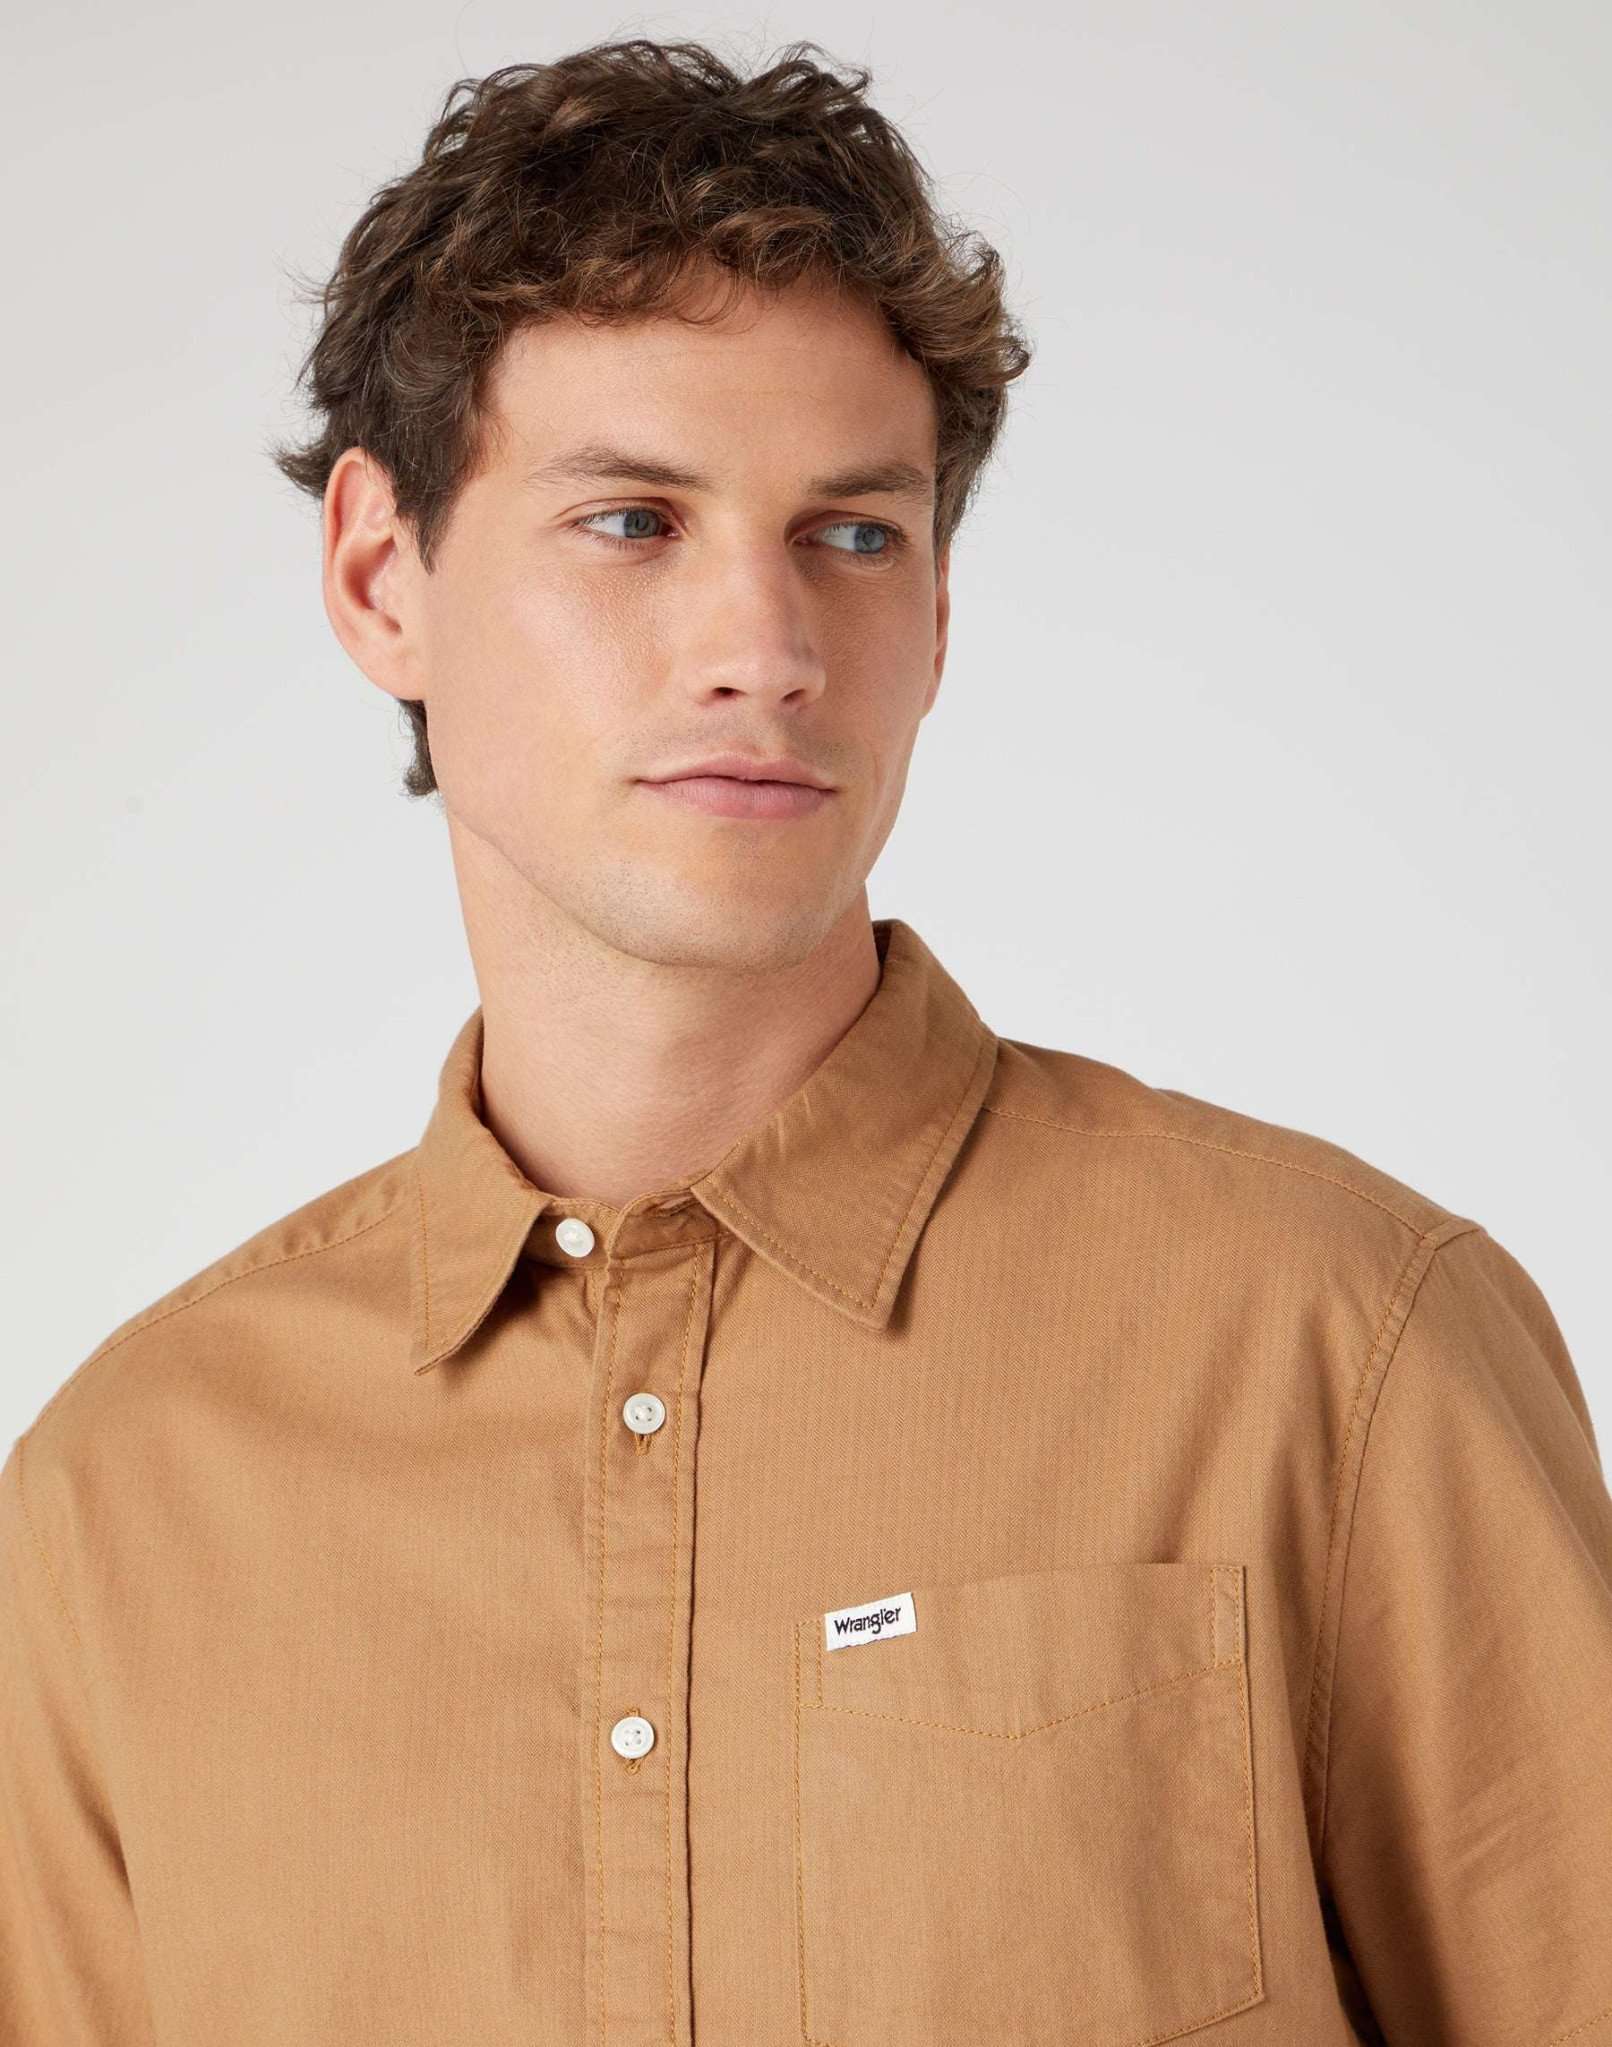 Kurzarm One Pocket Shirt in Tobacco Brown Hemden Wrangler   